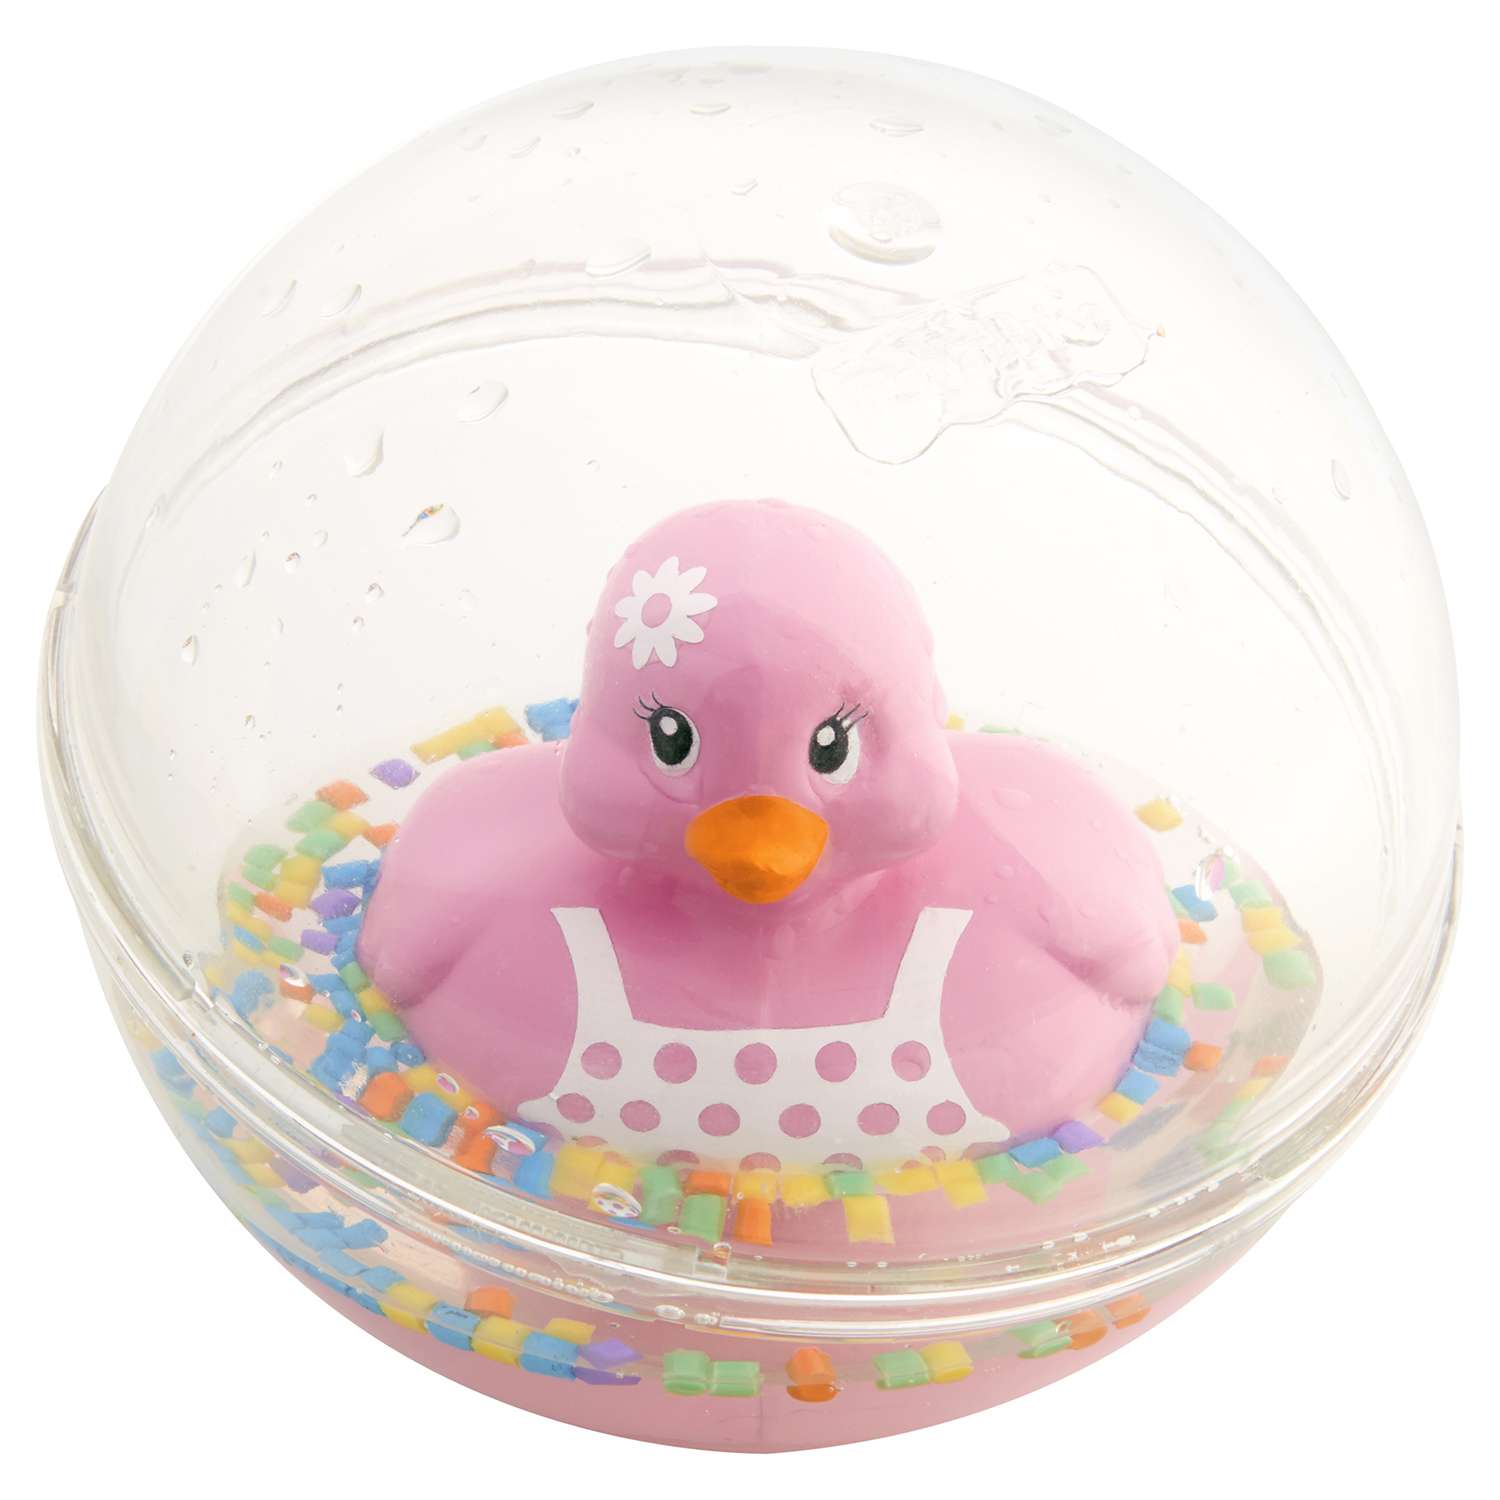 Шар Fisher Price с плавающей игрушкой Утка Розовая DRD82 - фото 6